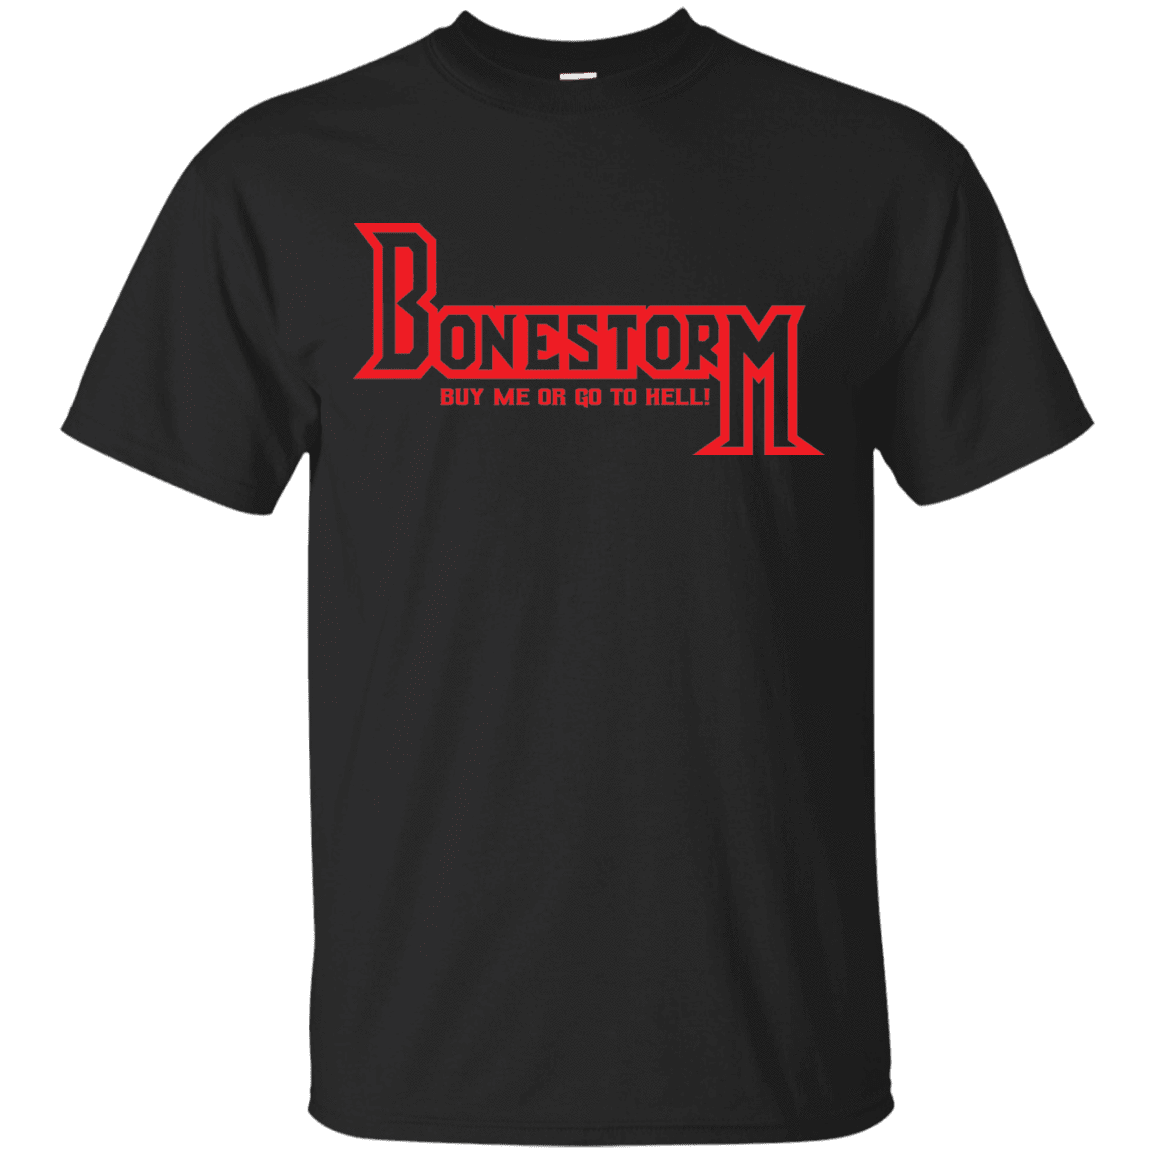 T-Shirts Black / S BONESTORM T-Shirt